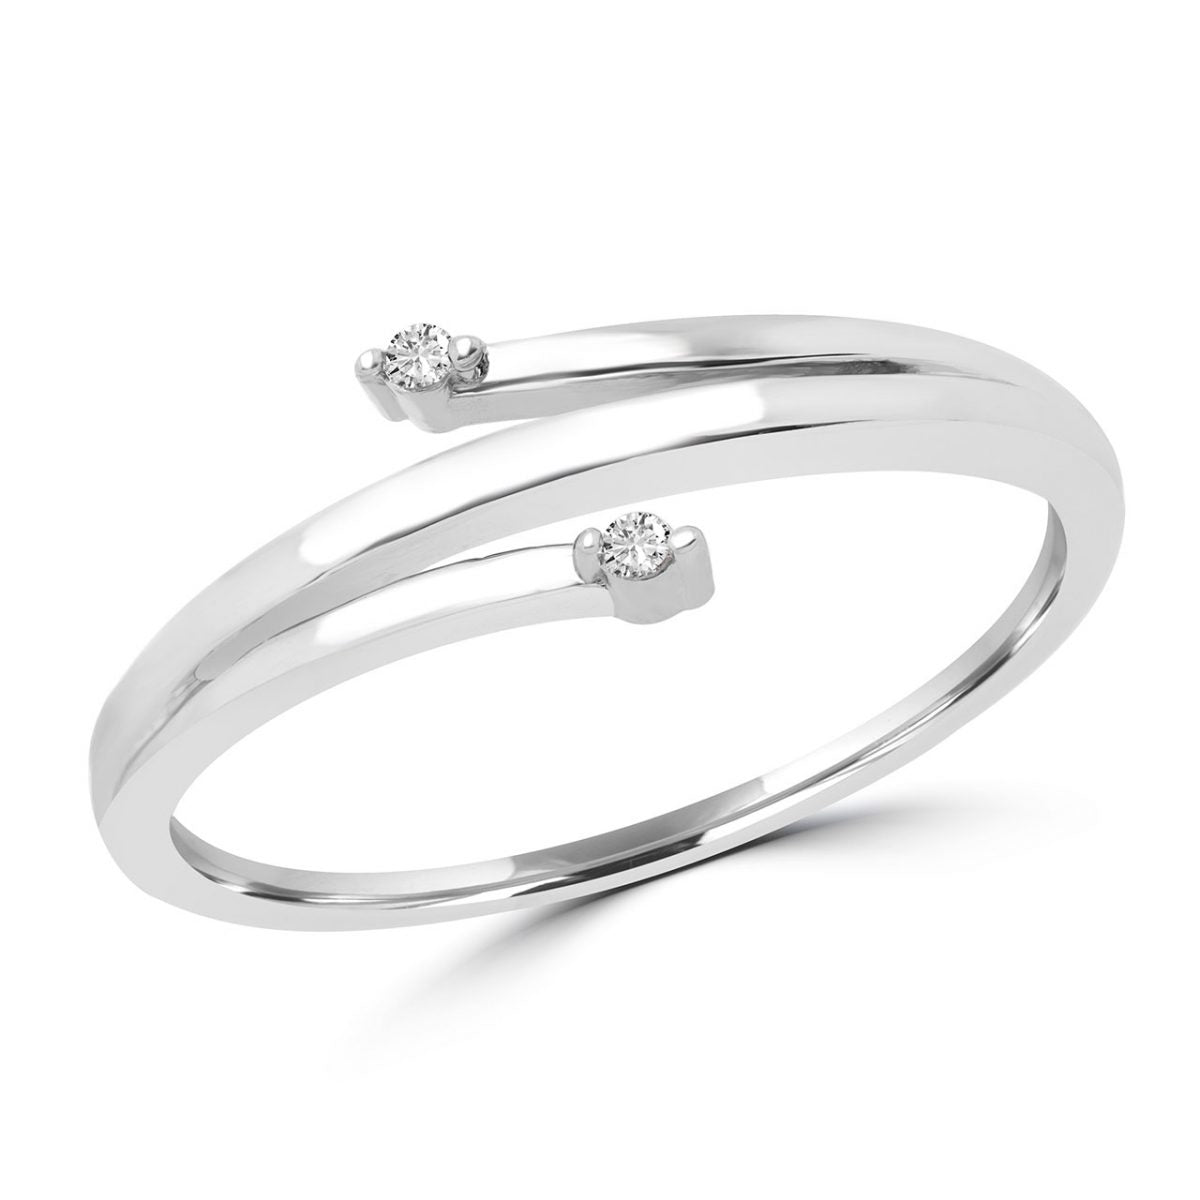 Gorgeous white gold promise ring with round diamond